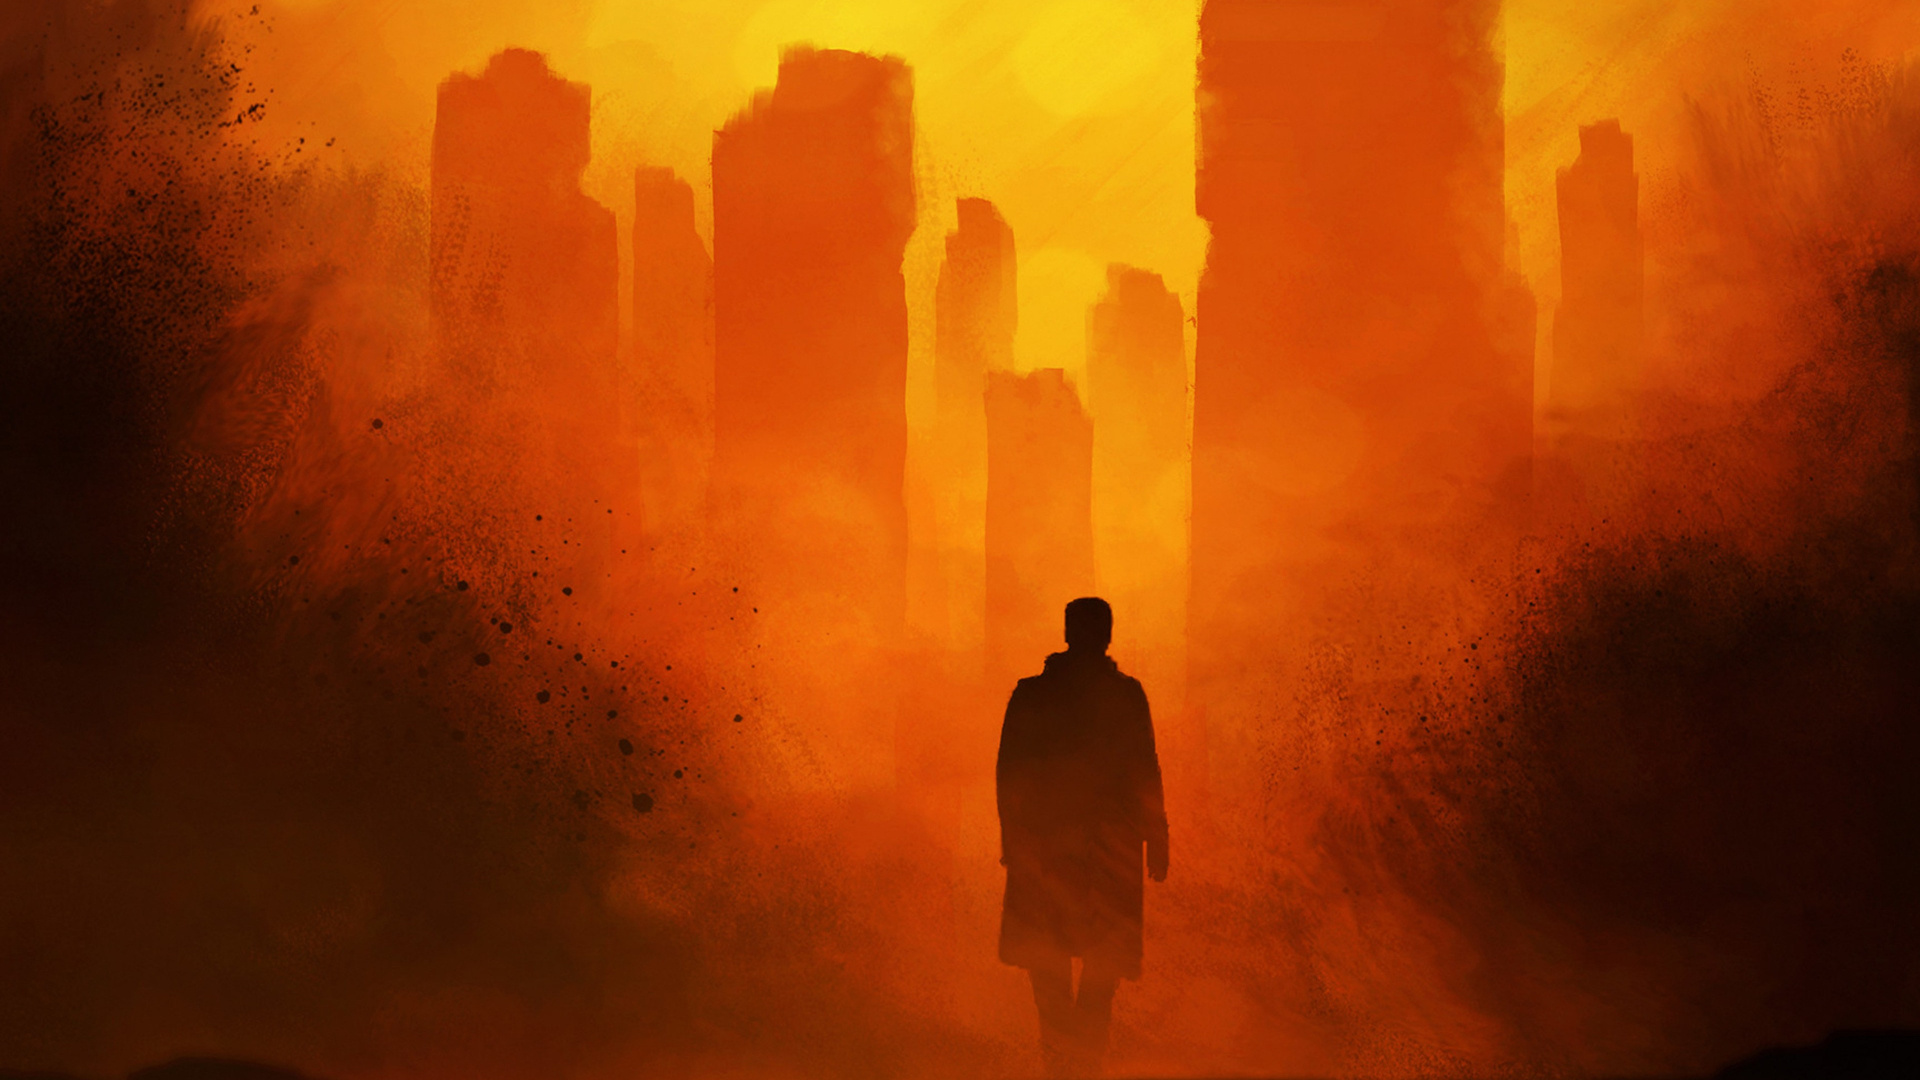 Free download Blade Runner 2049 city artwork, High resolution wallpapers, Stunning stock images, 1920x1080 Full HD Desktop